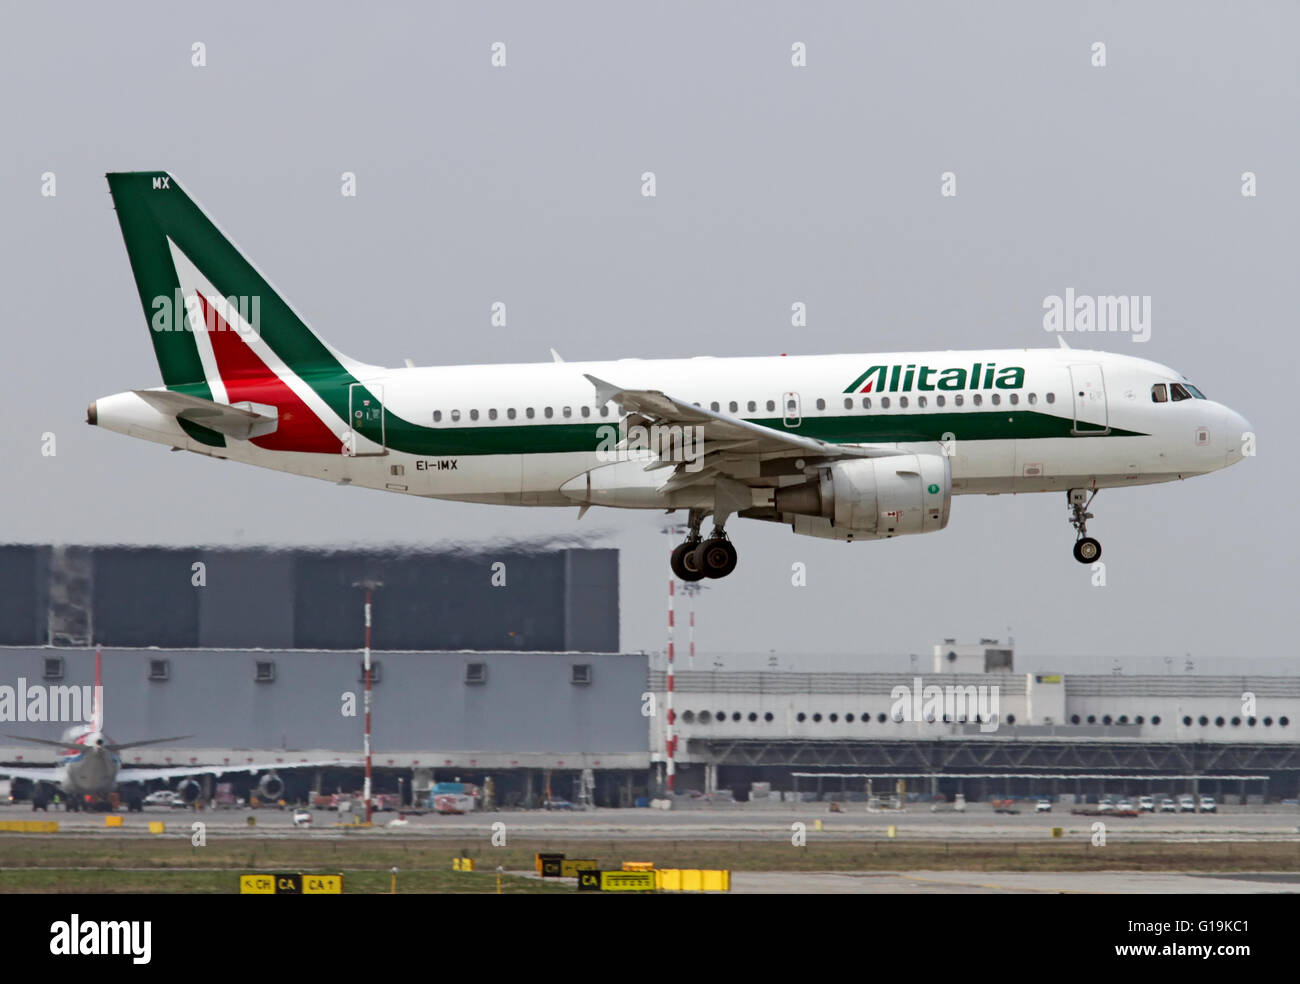 Alitalia Airbus A319-111. Fotografiert am Flughafen Malpensa, Mailand, Italien Stockfoto